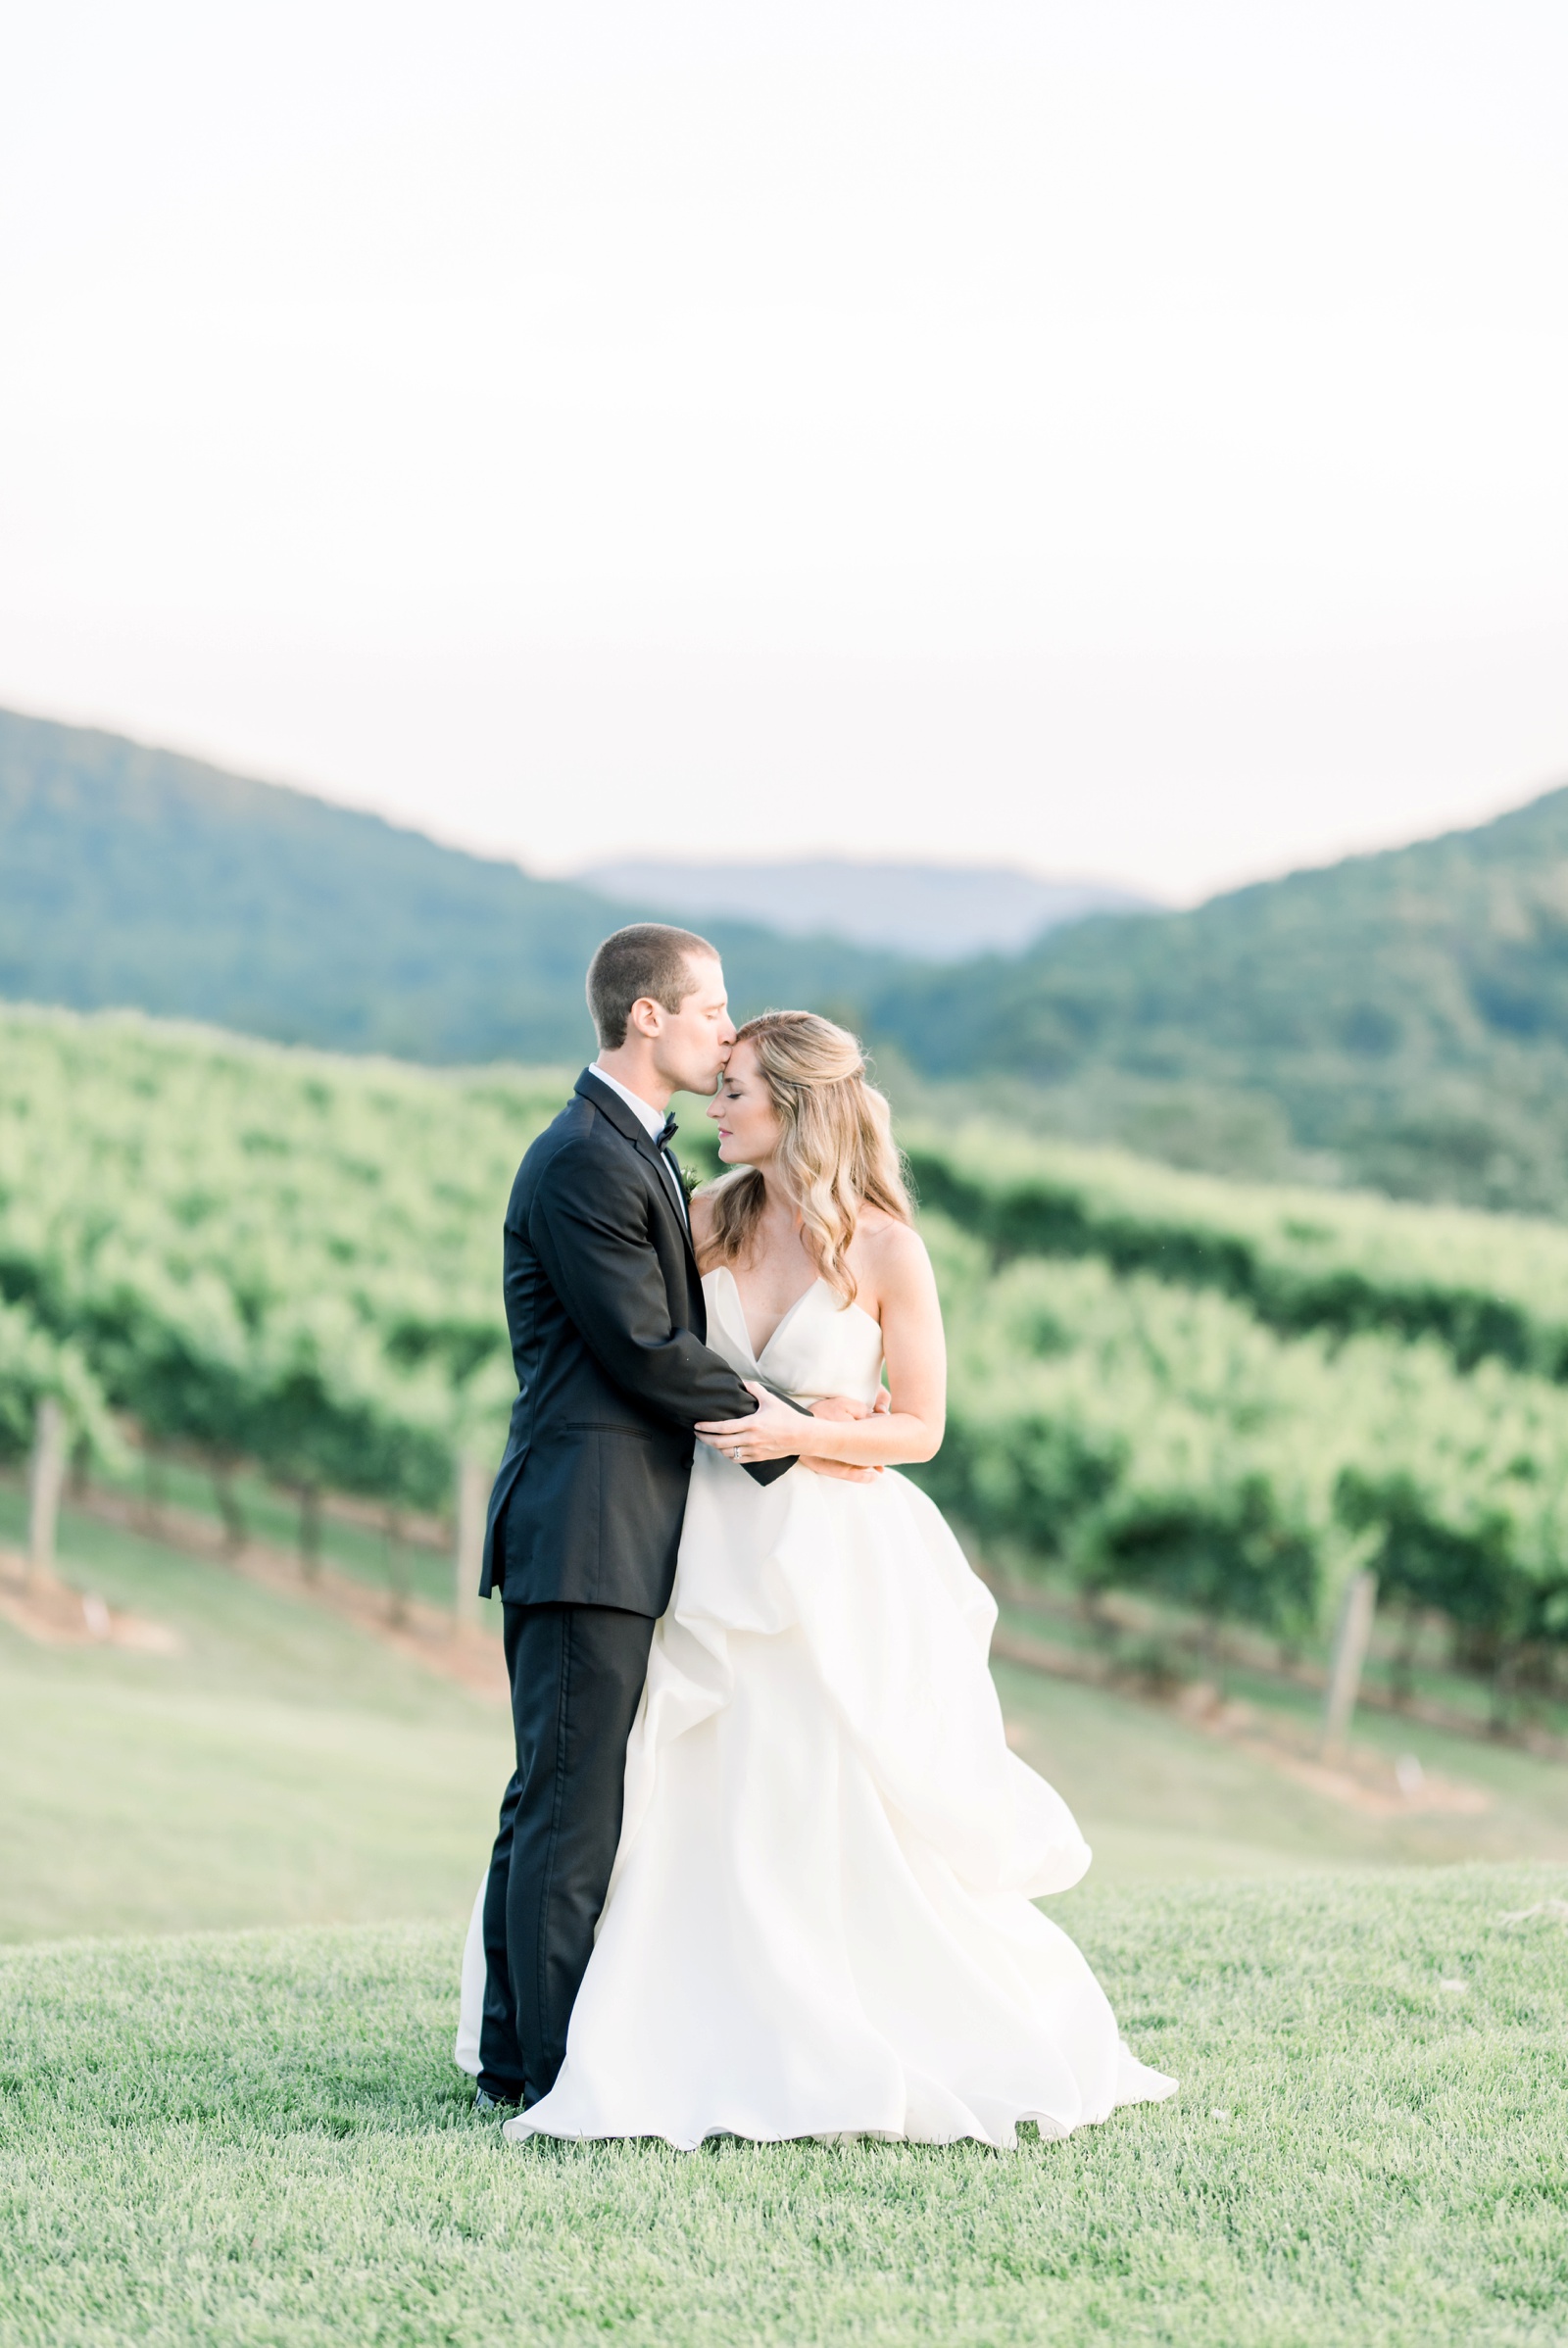 pippin-hill-vineyards-charlottesville-virginia-wedding-photographer-photo_8296.jpg